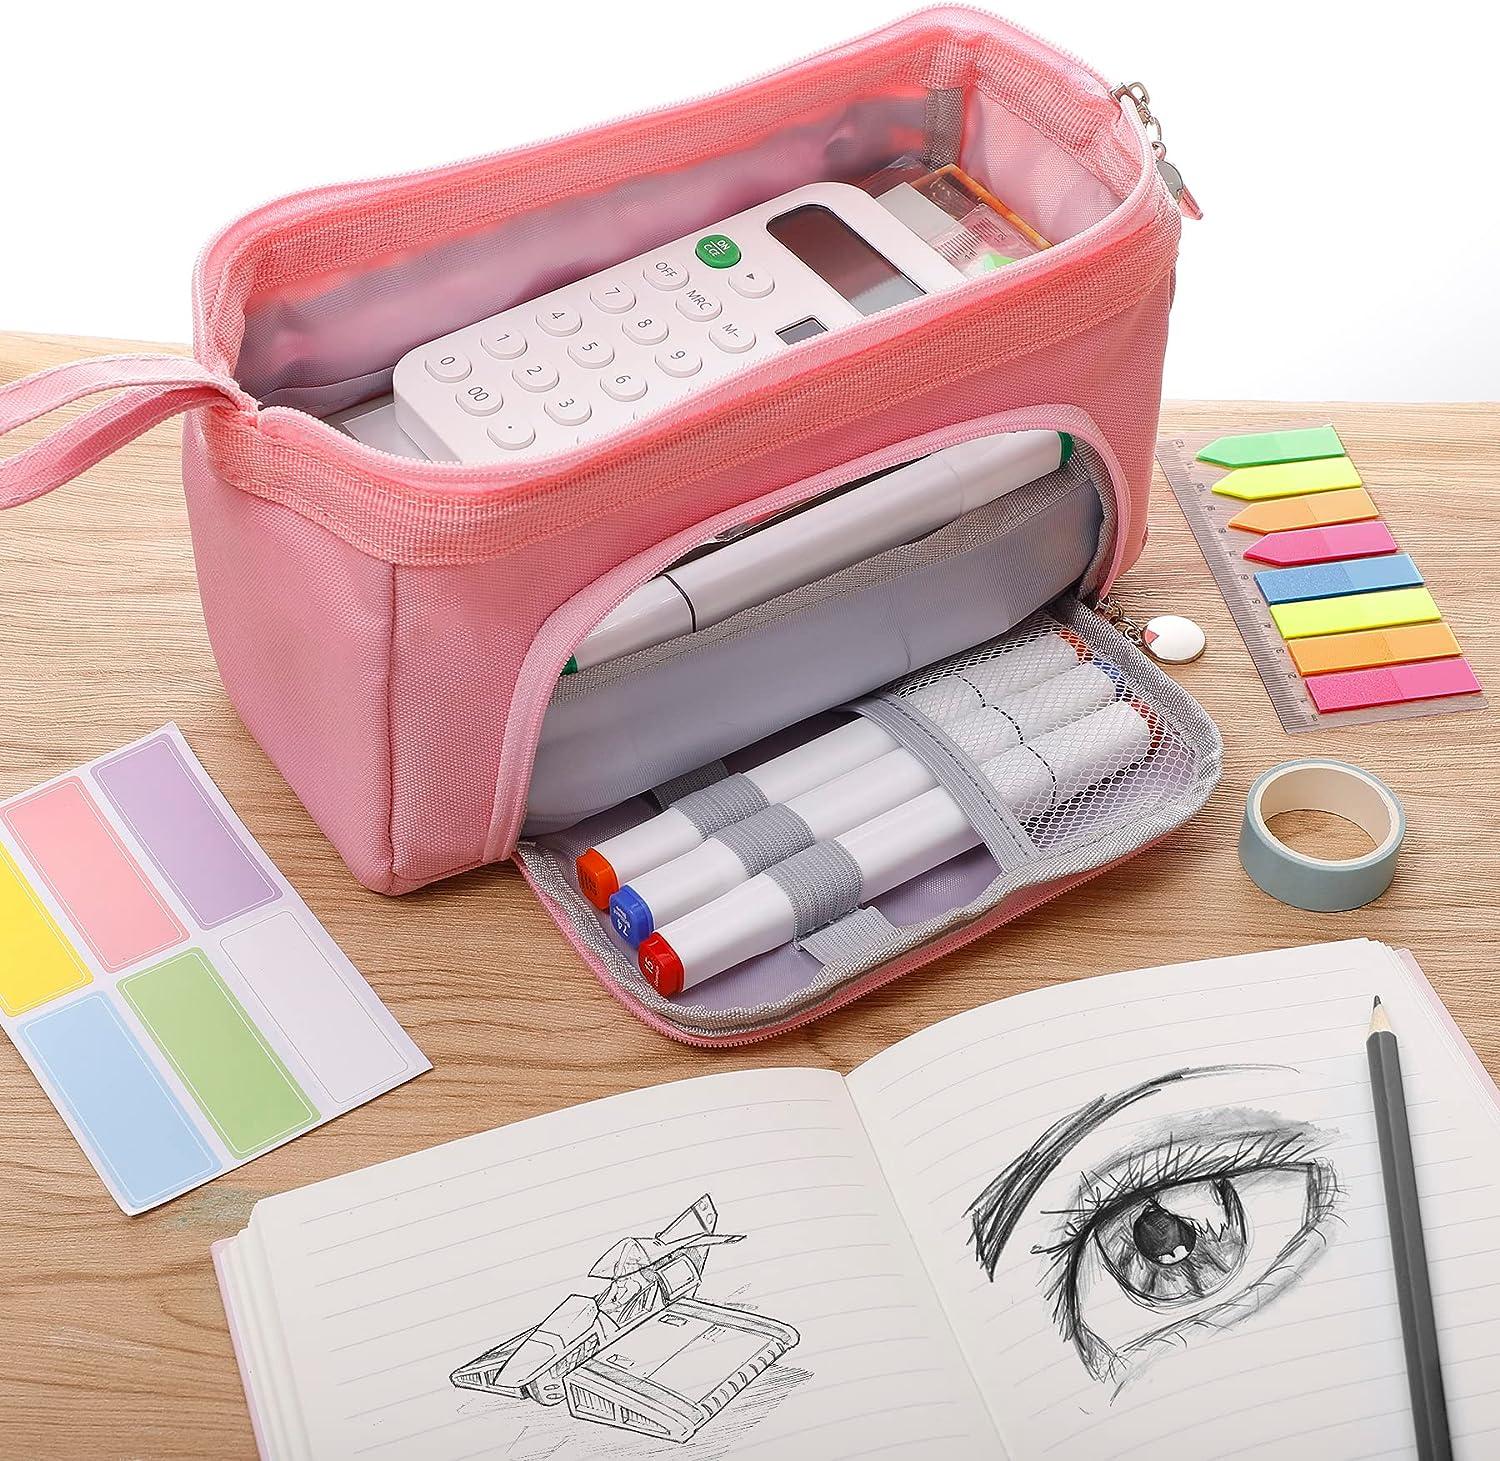 Pencil Case Large Capacity Pencil Pouch Handheld Pen Bag Cosmetic